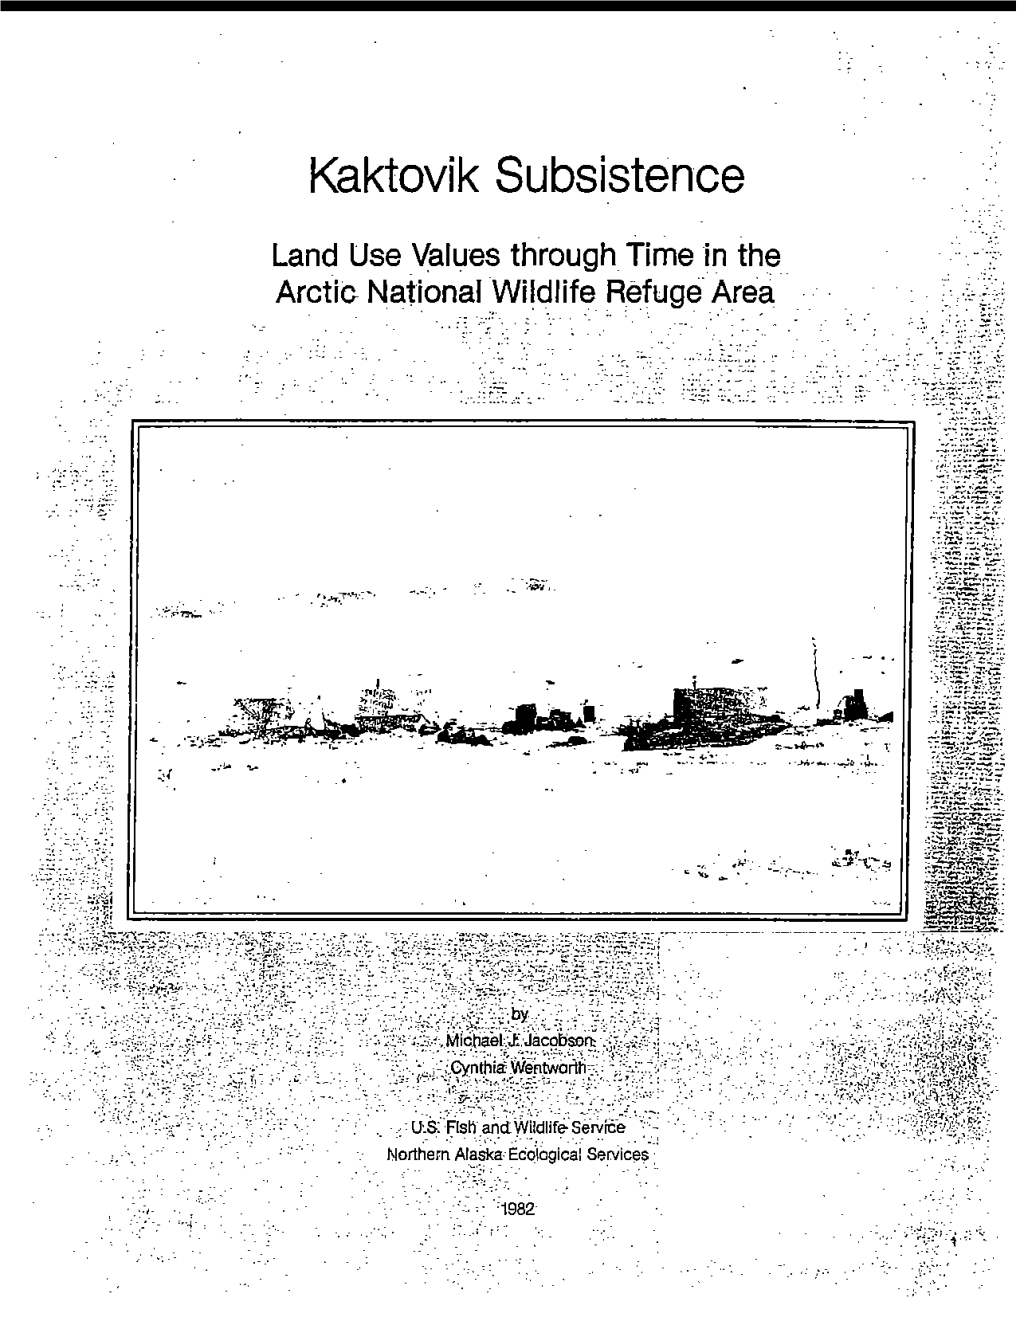 Kaktovik Subsistence LAND USE VALUES THROUGH TIME in the ARCTIC NATIONAL WILDLIFE REFUGE AREA